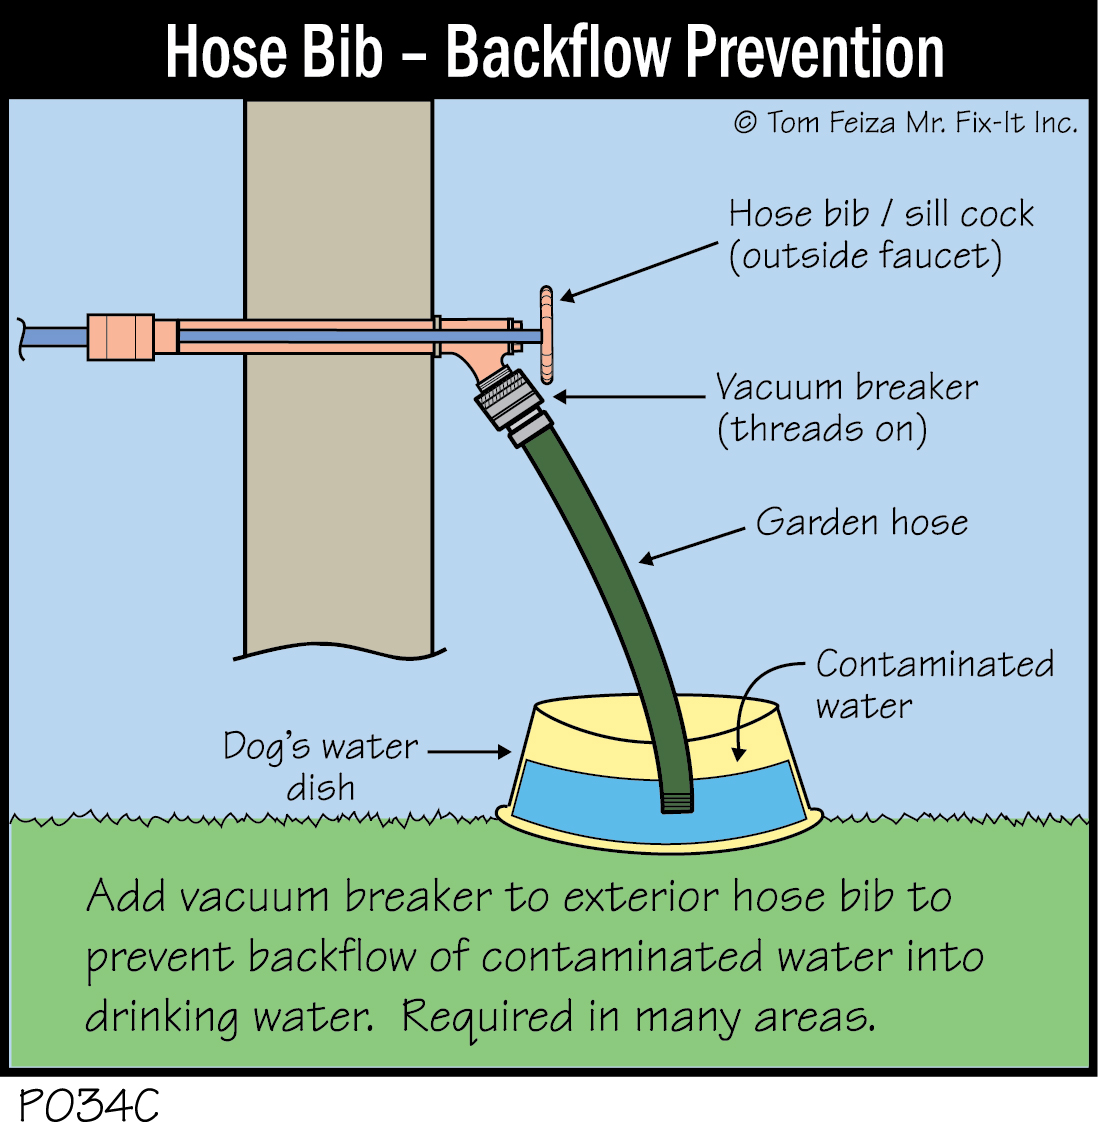 P034C - Hose Bib, Backflow Prevention